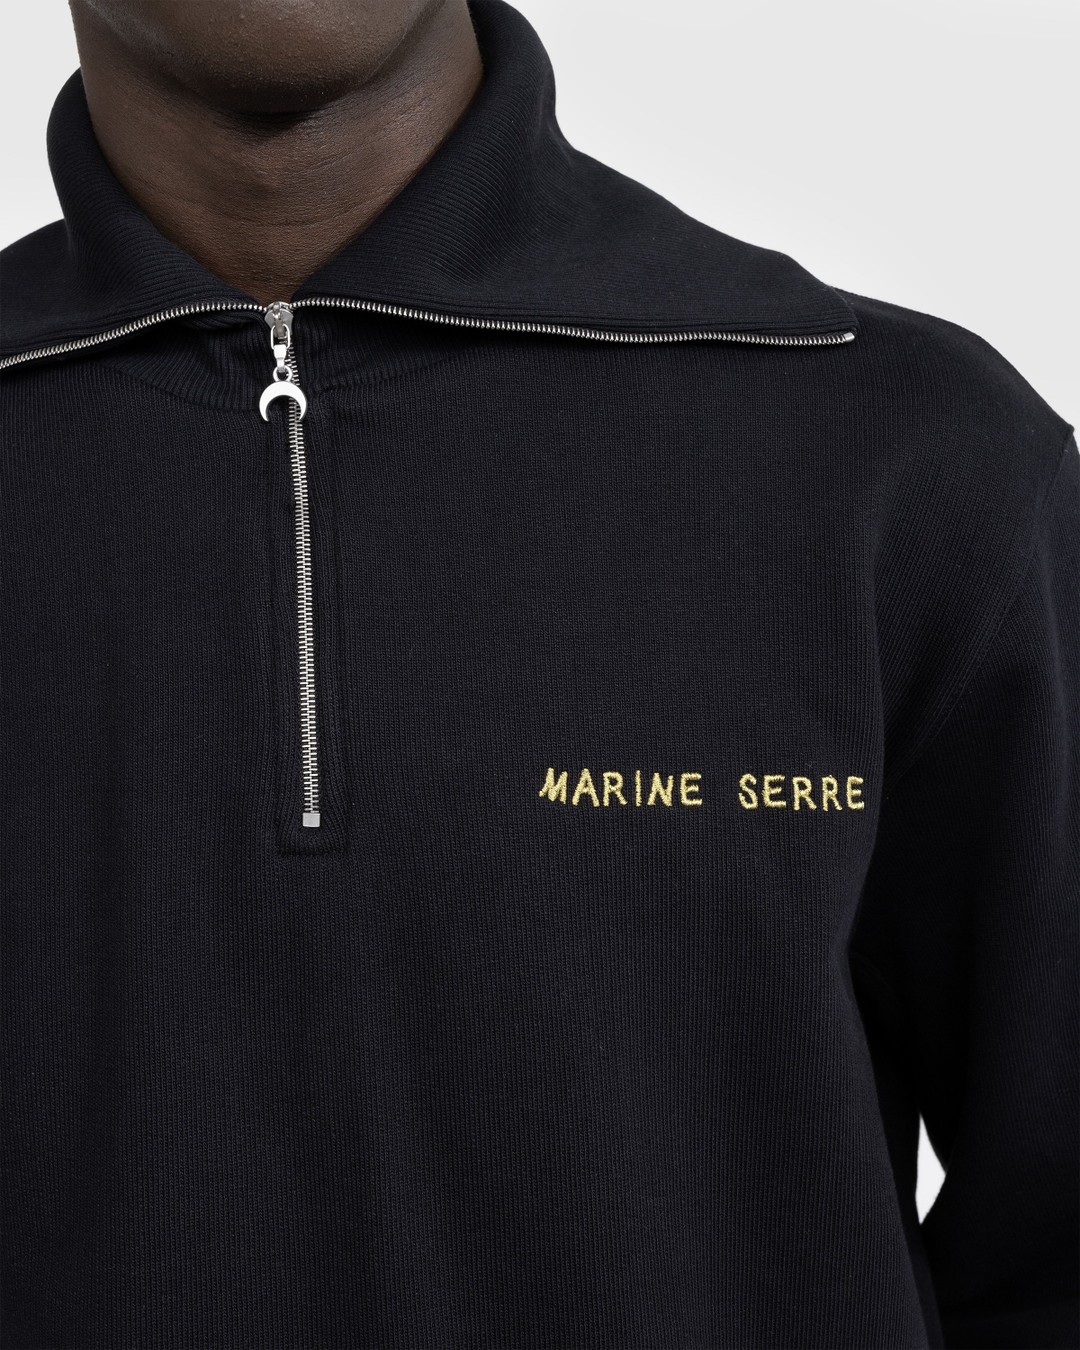 Marine Serre – Ornament Half-Zip Sweater Black - Knitwear - Black - Image 4